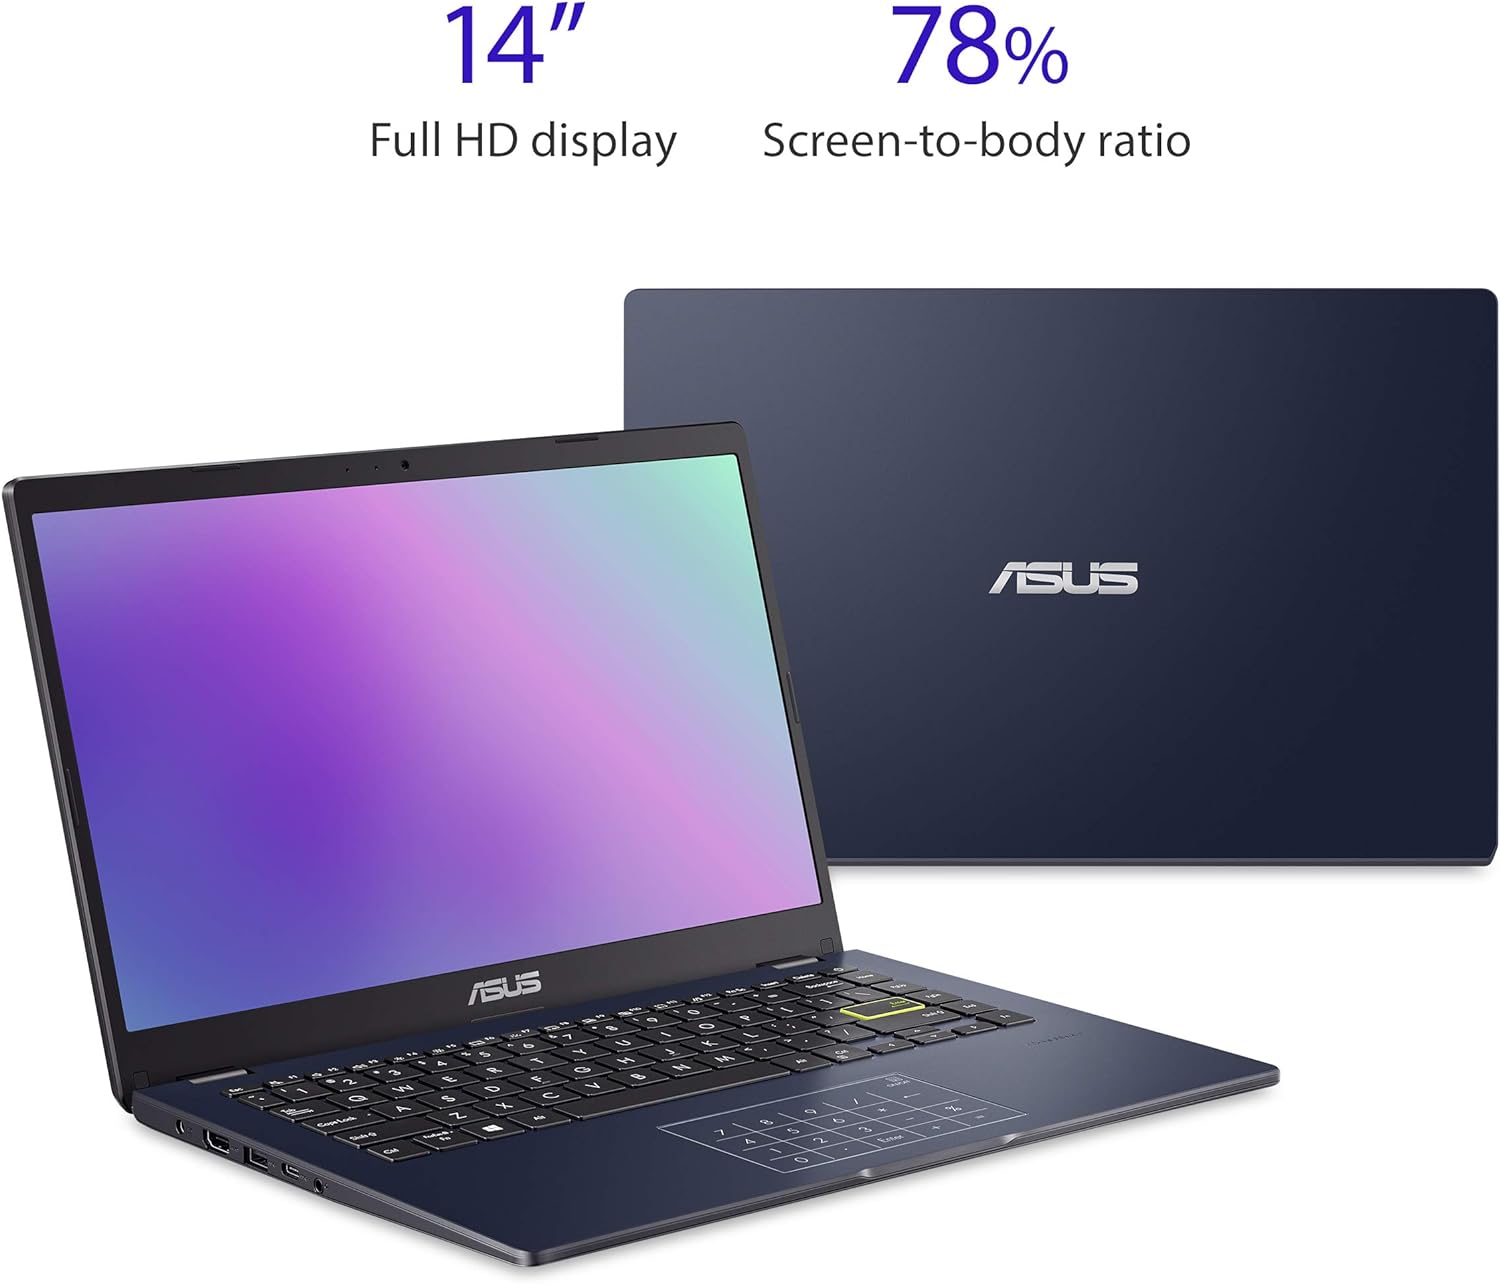 ASUS Vivobook Go 14 L410 Ultra Thin Laptop, 14” FHD Display, Intel Celeron N4020 Processor, 4GB RAM, 64GB eMMC, NumberPad, Windows 11 Home in S Mode, 1 Year Microsoft 365, Star Black, L410MA-AH02